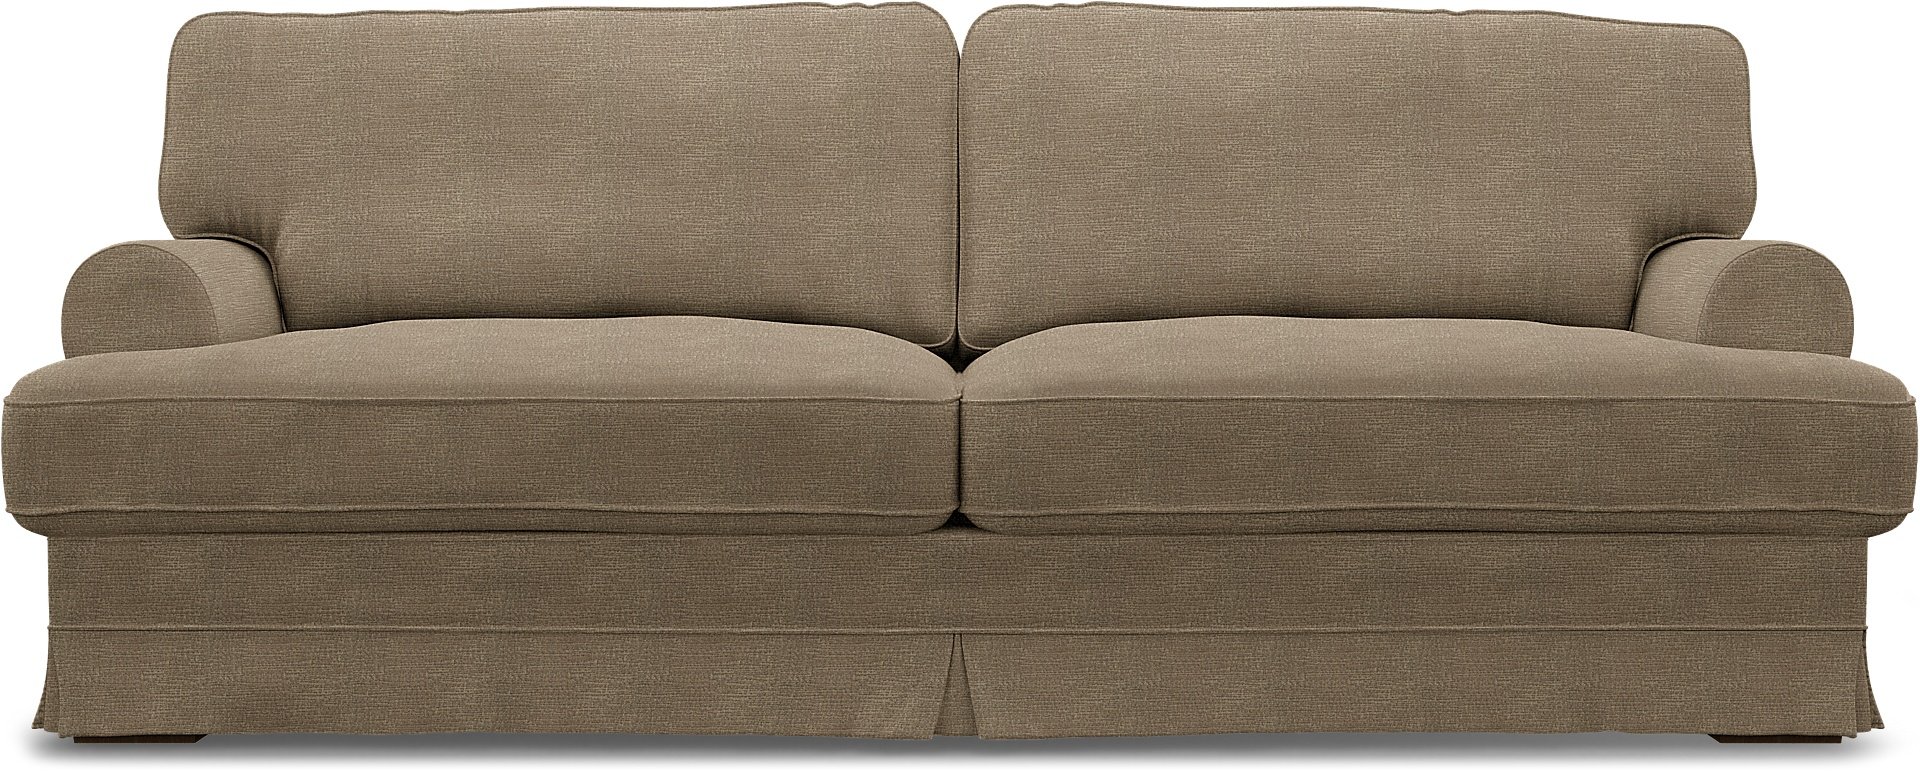 IKEA - Ekeskog 3 Seater Sofa Cover, Camel, Boucle & Texture - Bemz